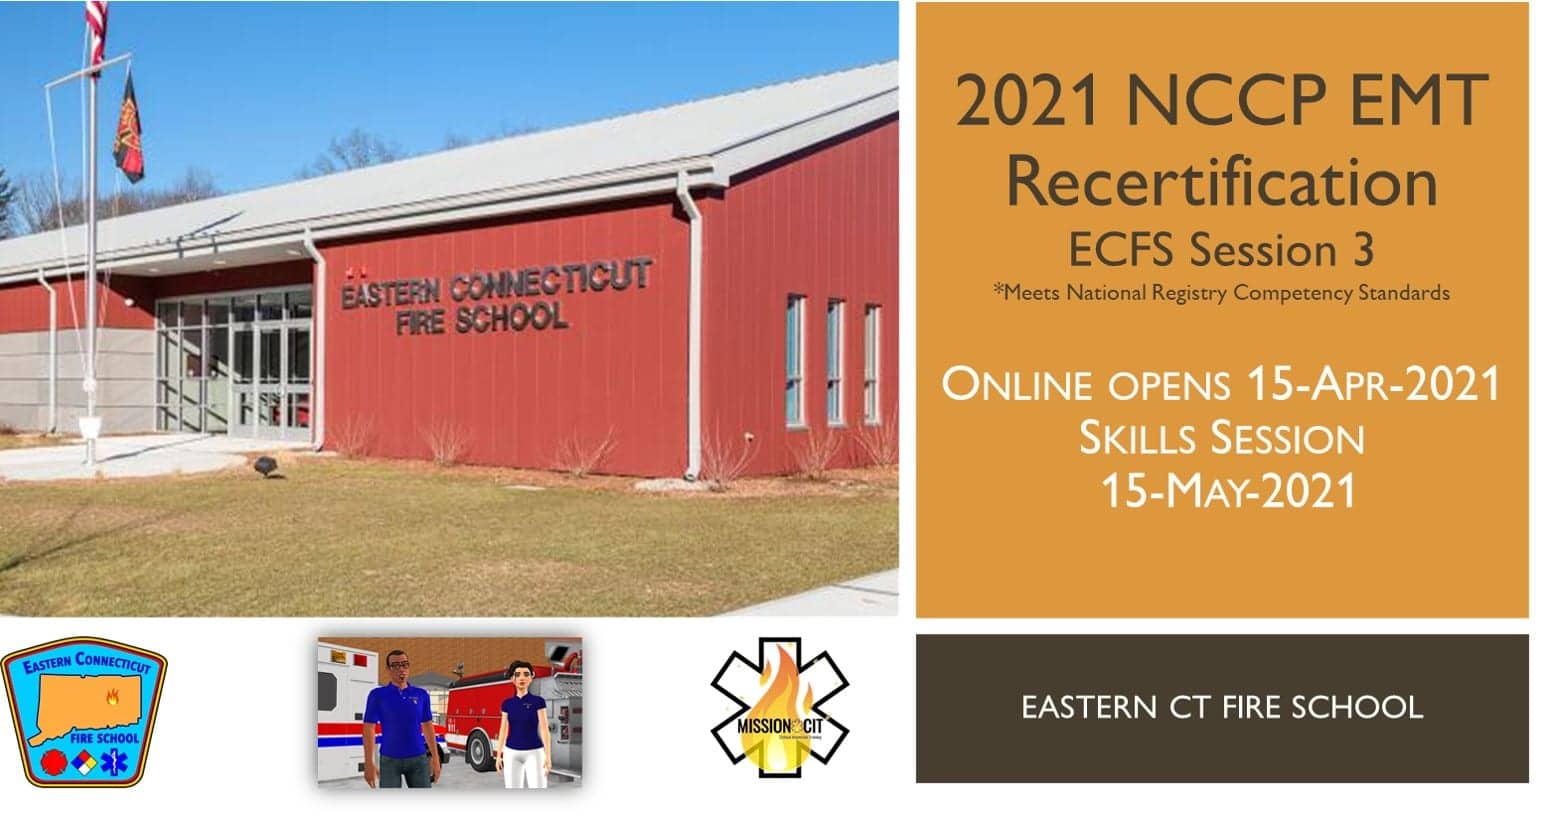 EMT NCCP Recertification Hybrid Course | ECFS | 2021 Session 2